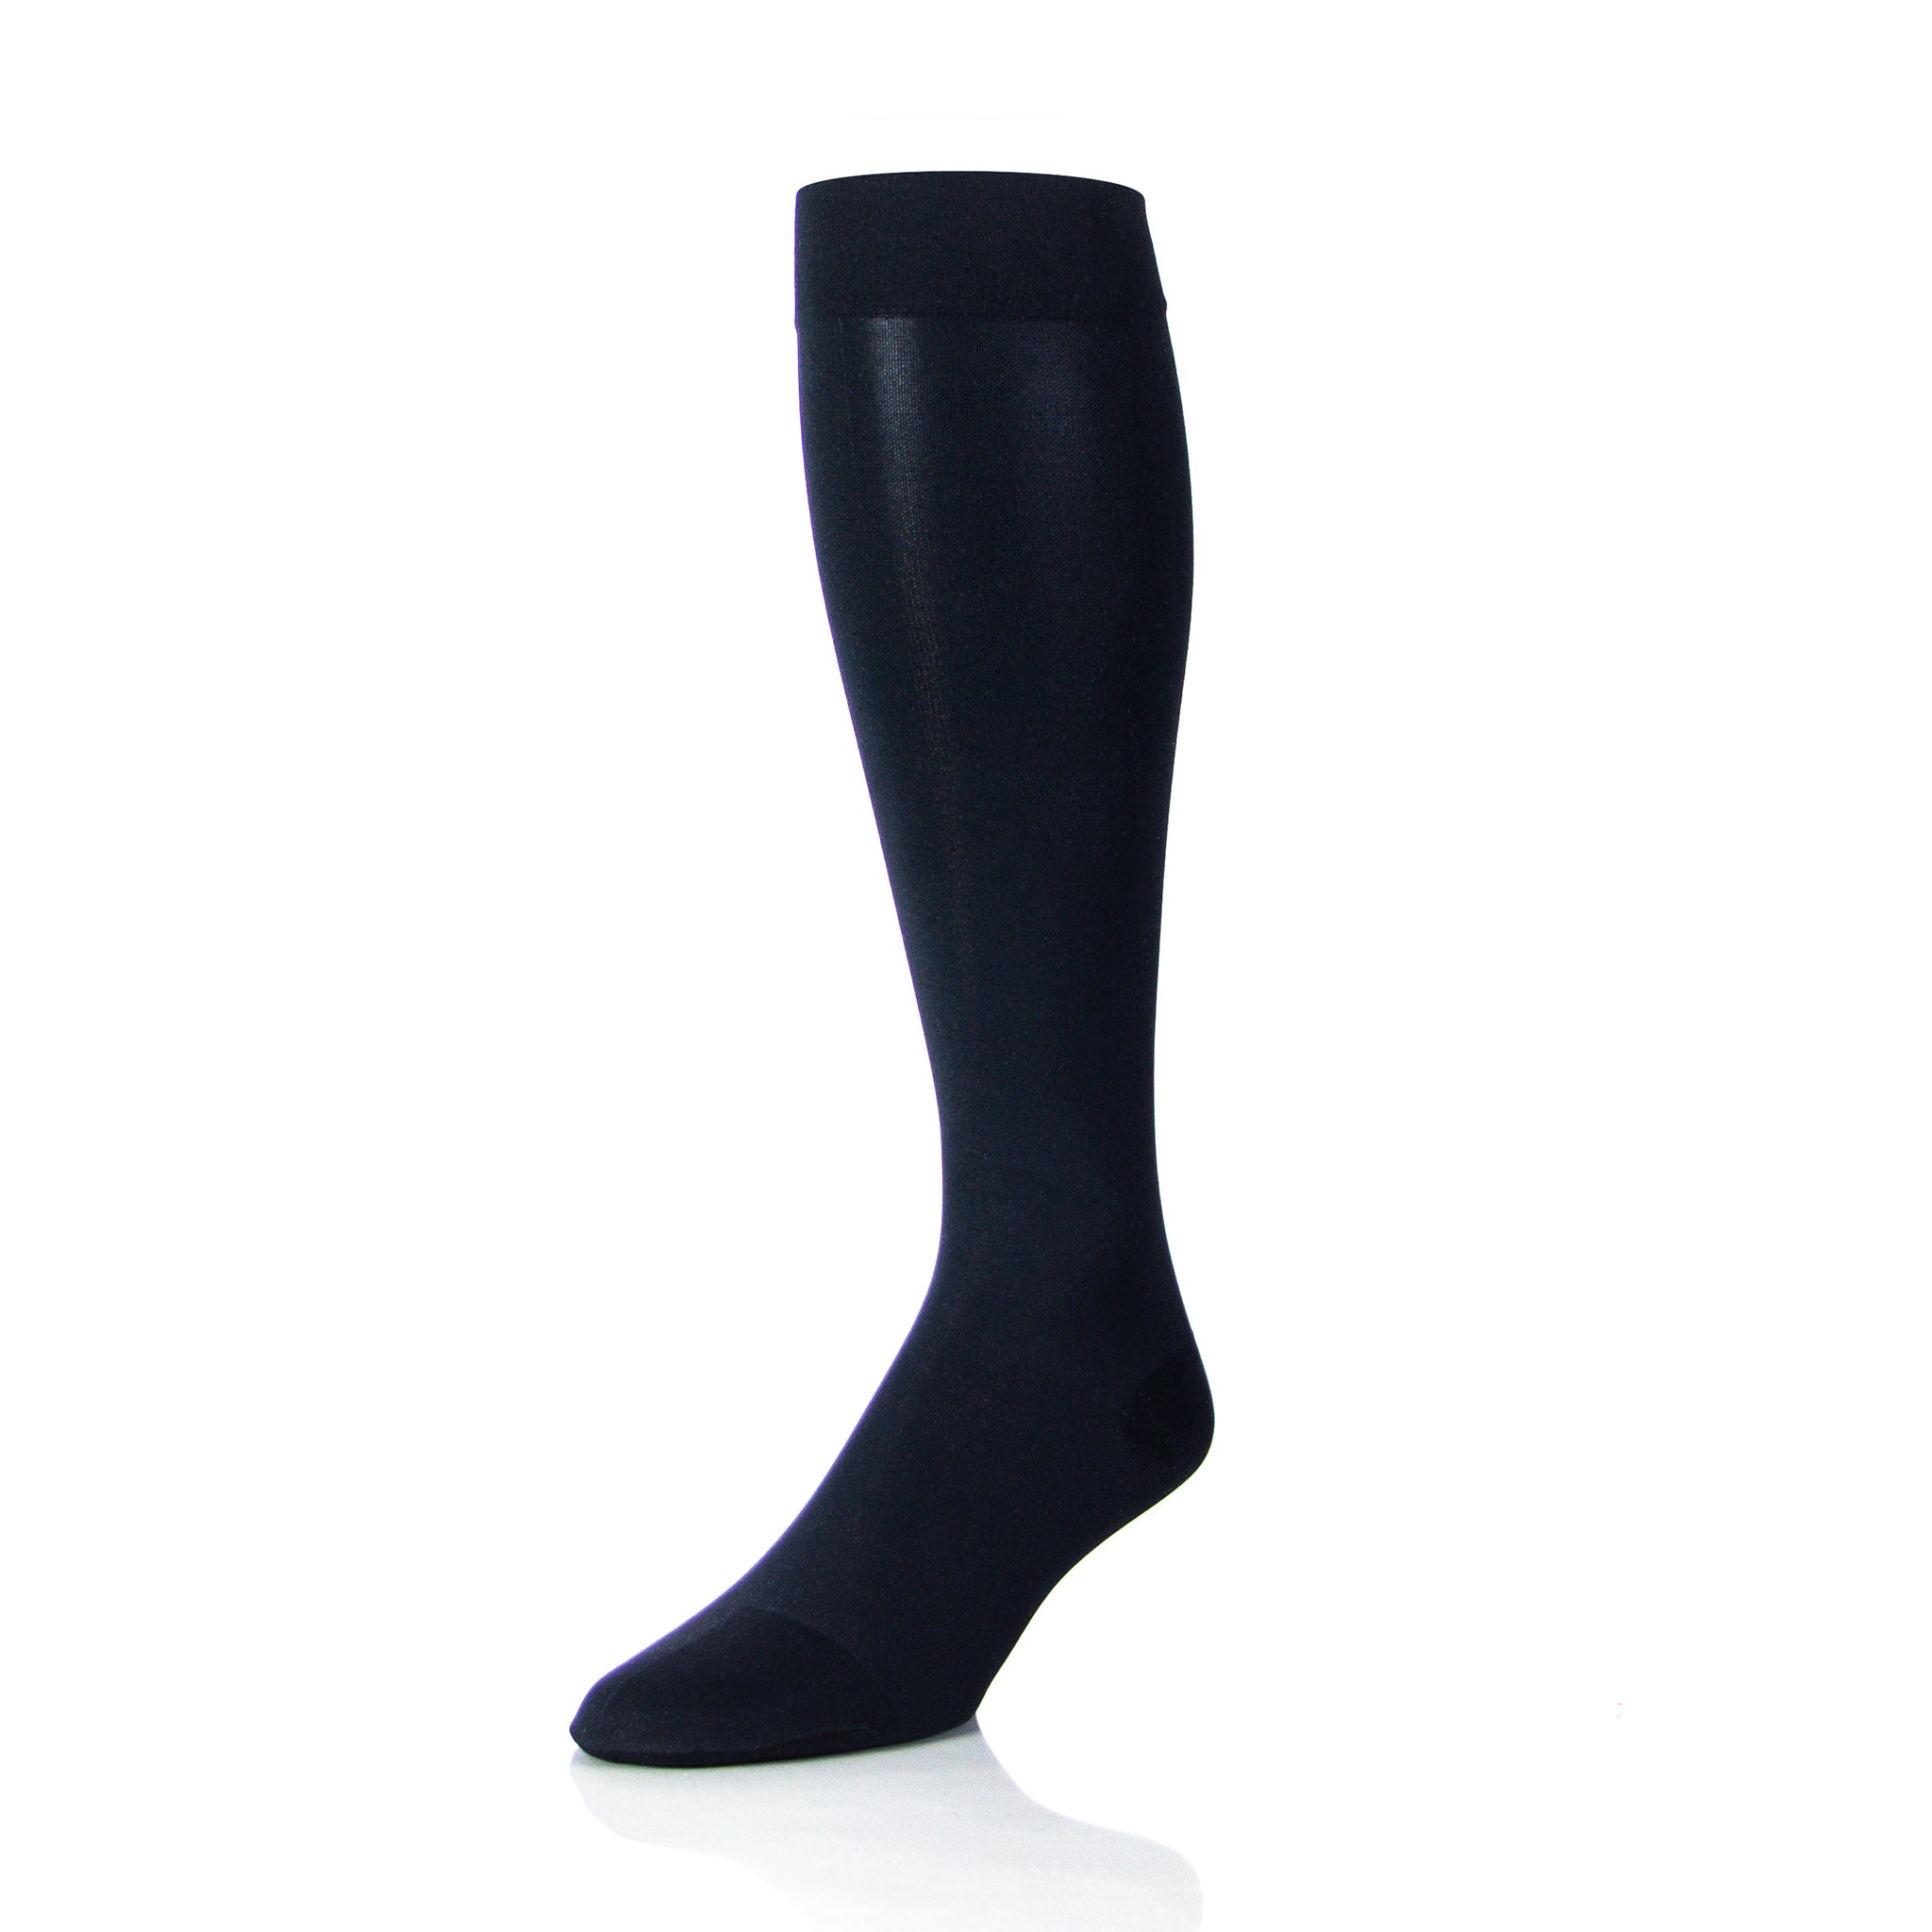 Jobst for Men Compression Socks 20-30 mmHg - Knee High / Closed Toe / –   (by 99 Pharmacy)